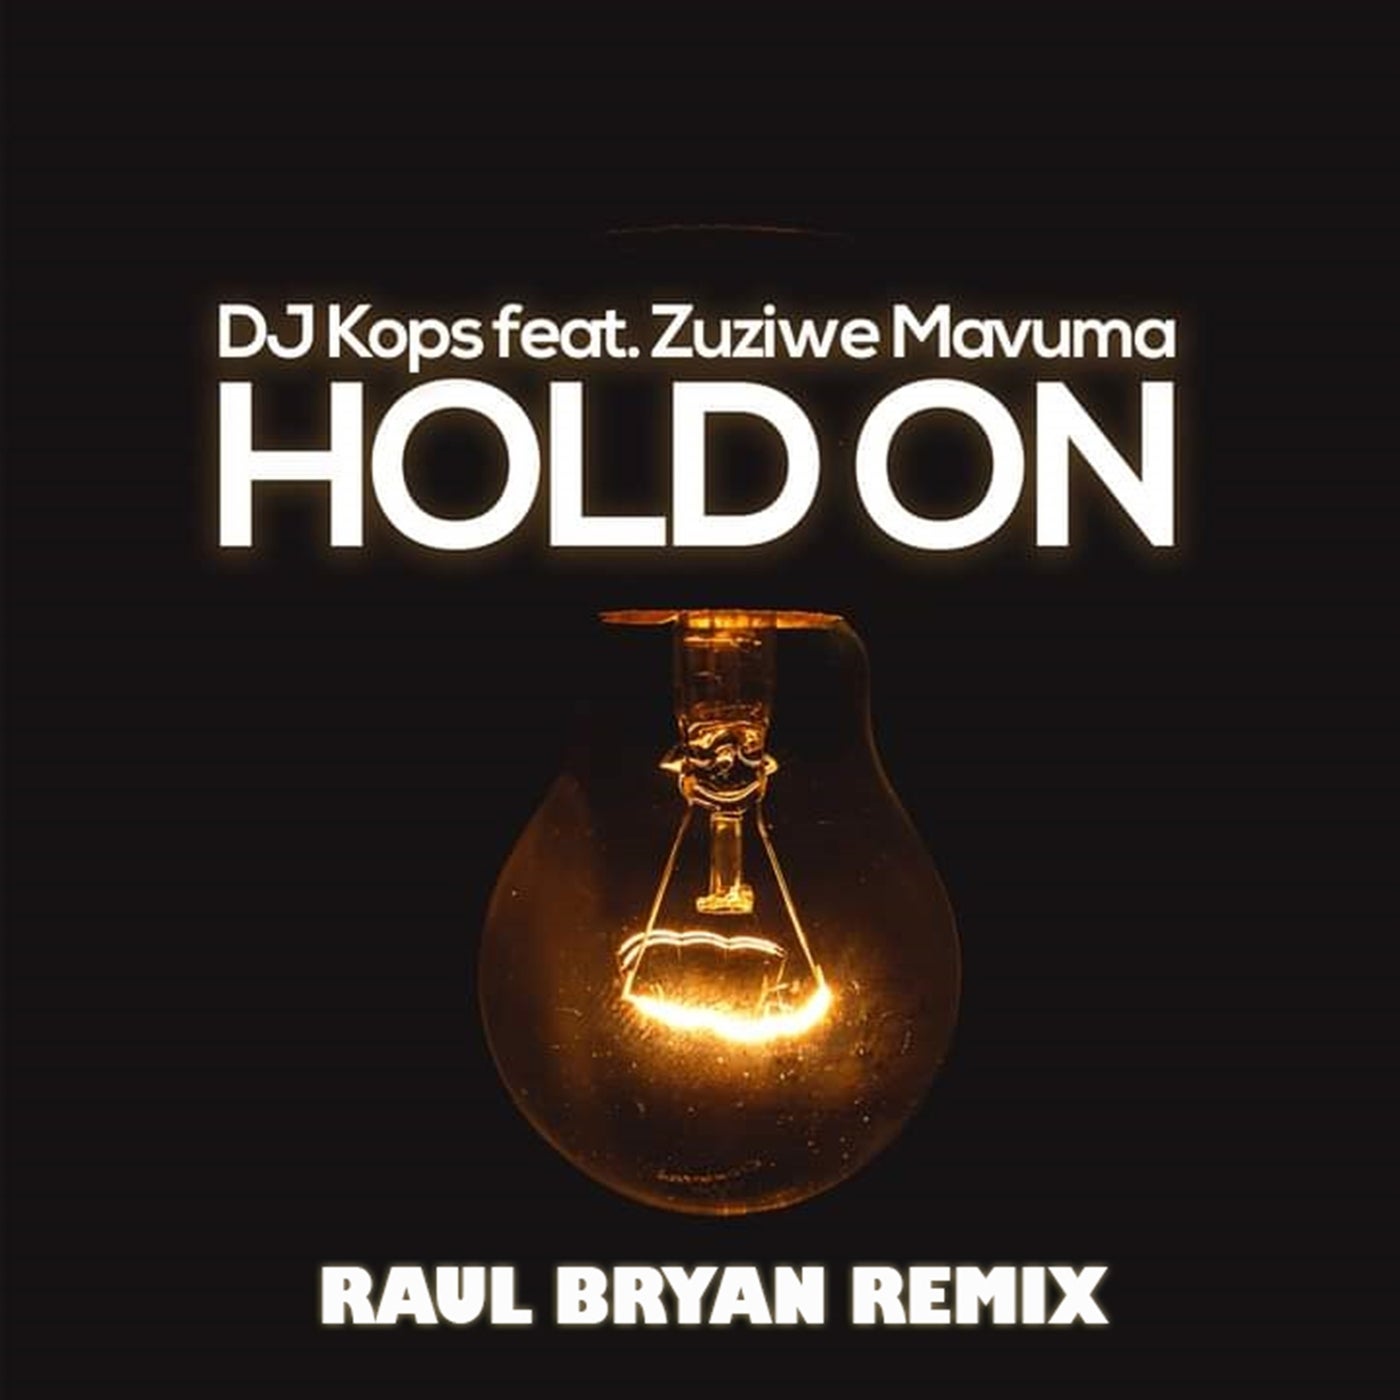 Hold On - Raul Bryan Remix